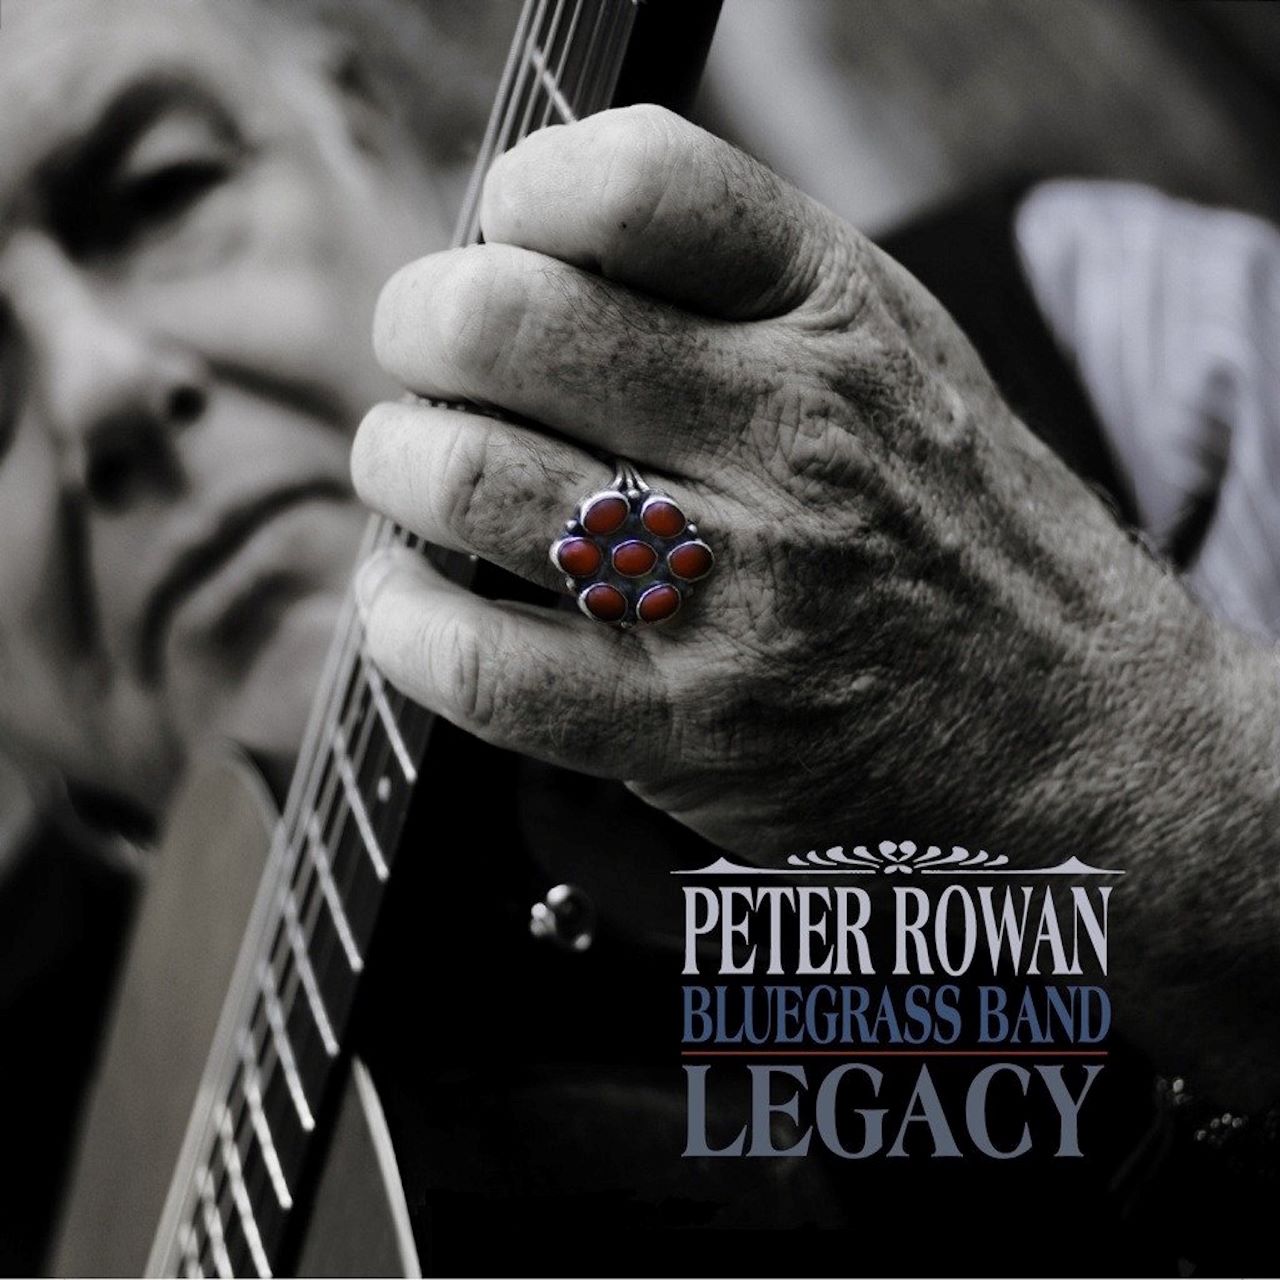 Peter Rowan Bluegrass Band - Legacy cover album